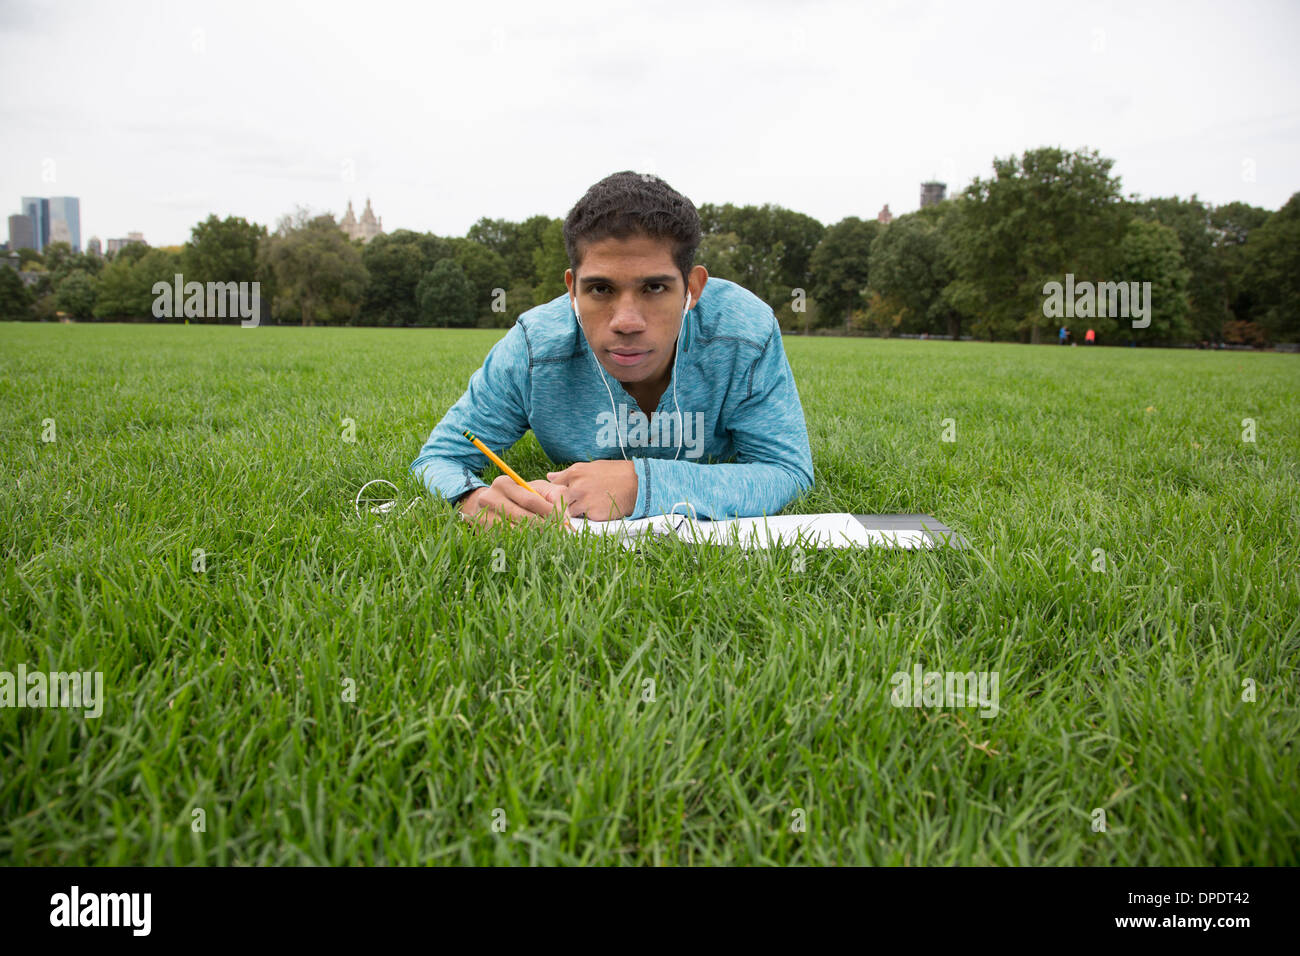 Young man lying on grass doing homework Stock Photo